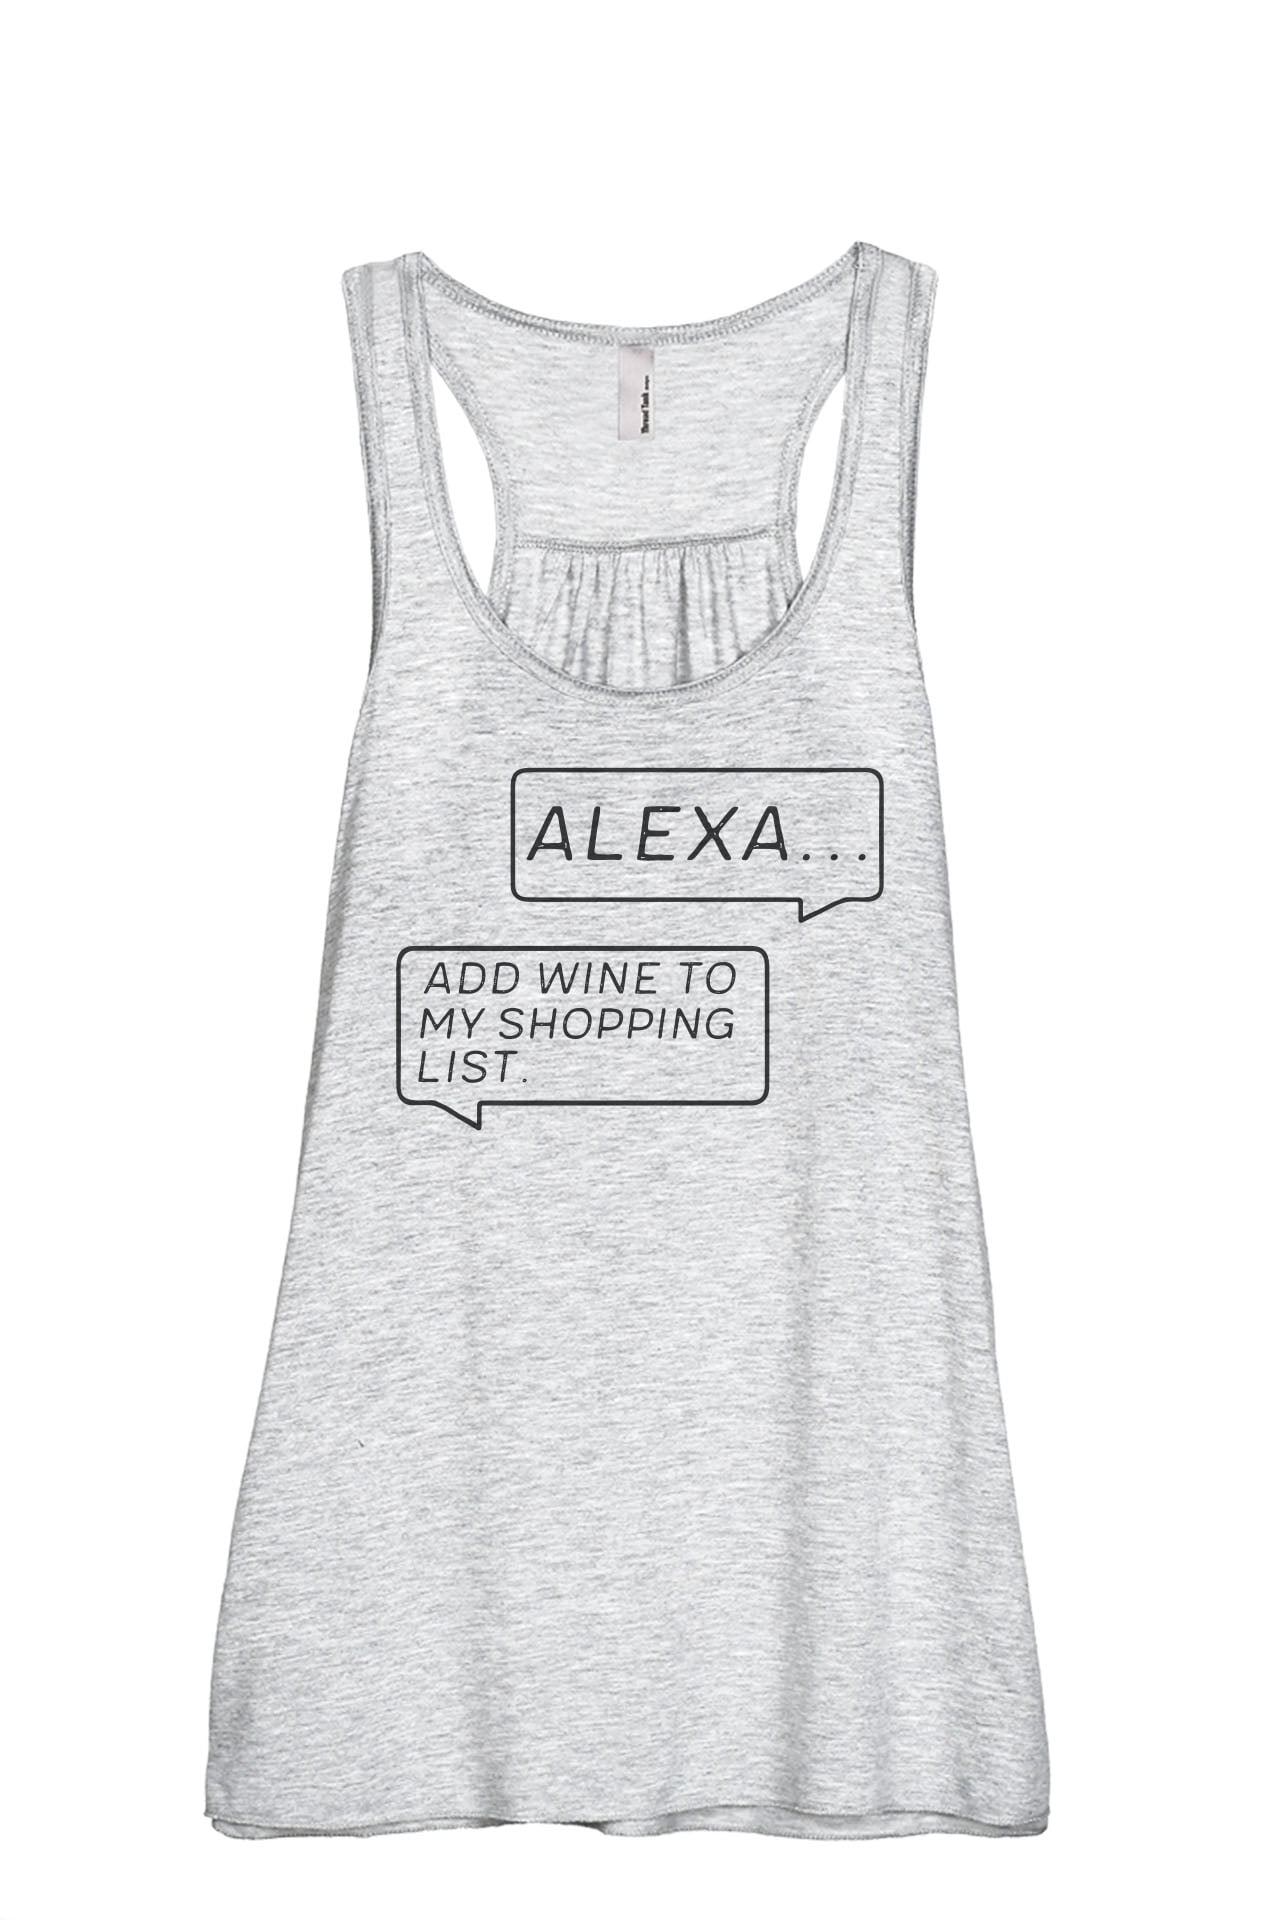 Til sandheden St Tage en risiko Alexa Add Wine To My Shopping List Women's Fashion Sleeveless Flowy  Racerback Workout Yoga Tank Top Sport Grey Medium - Walmart.com